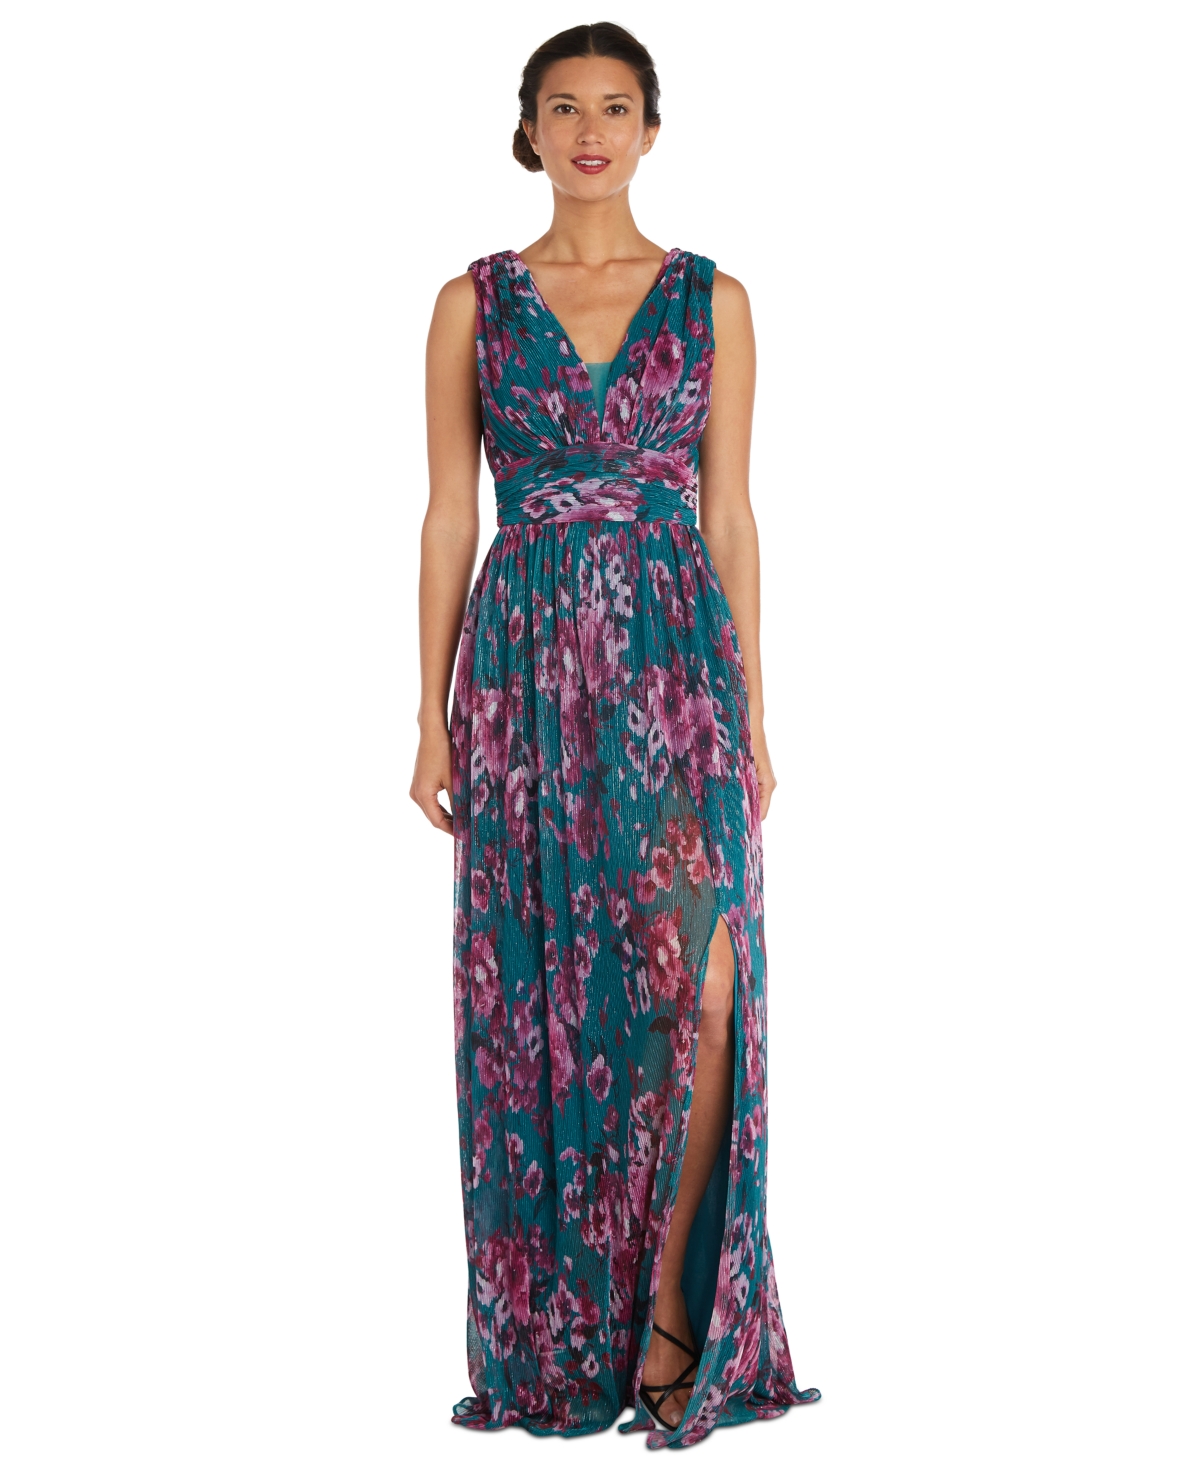 Women's Metallic Floral Print Sleeveless Gown - Teal